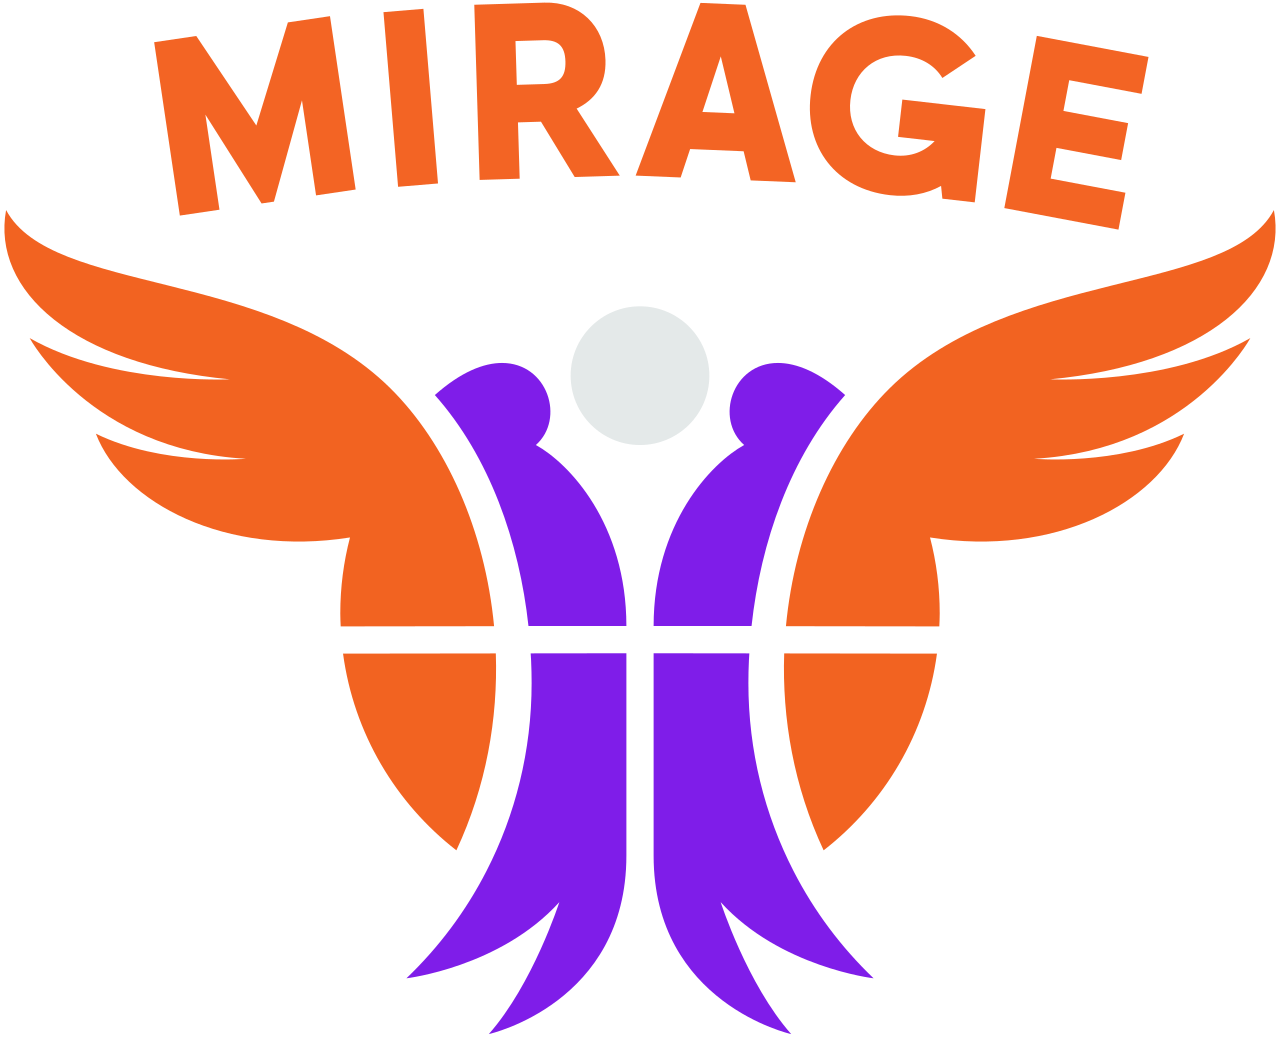  MIRAGE 's logo